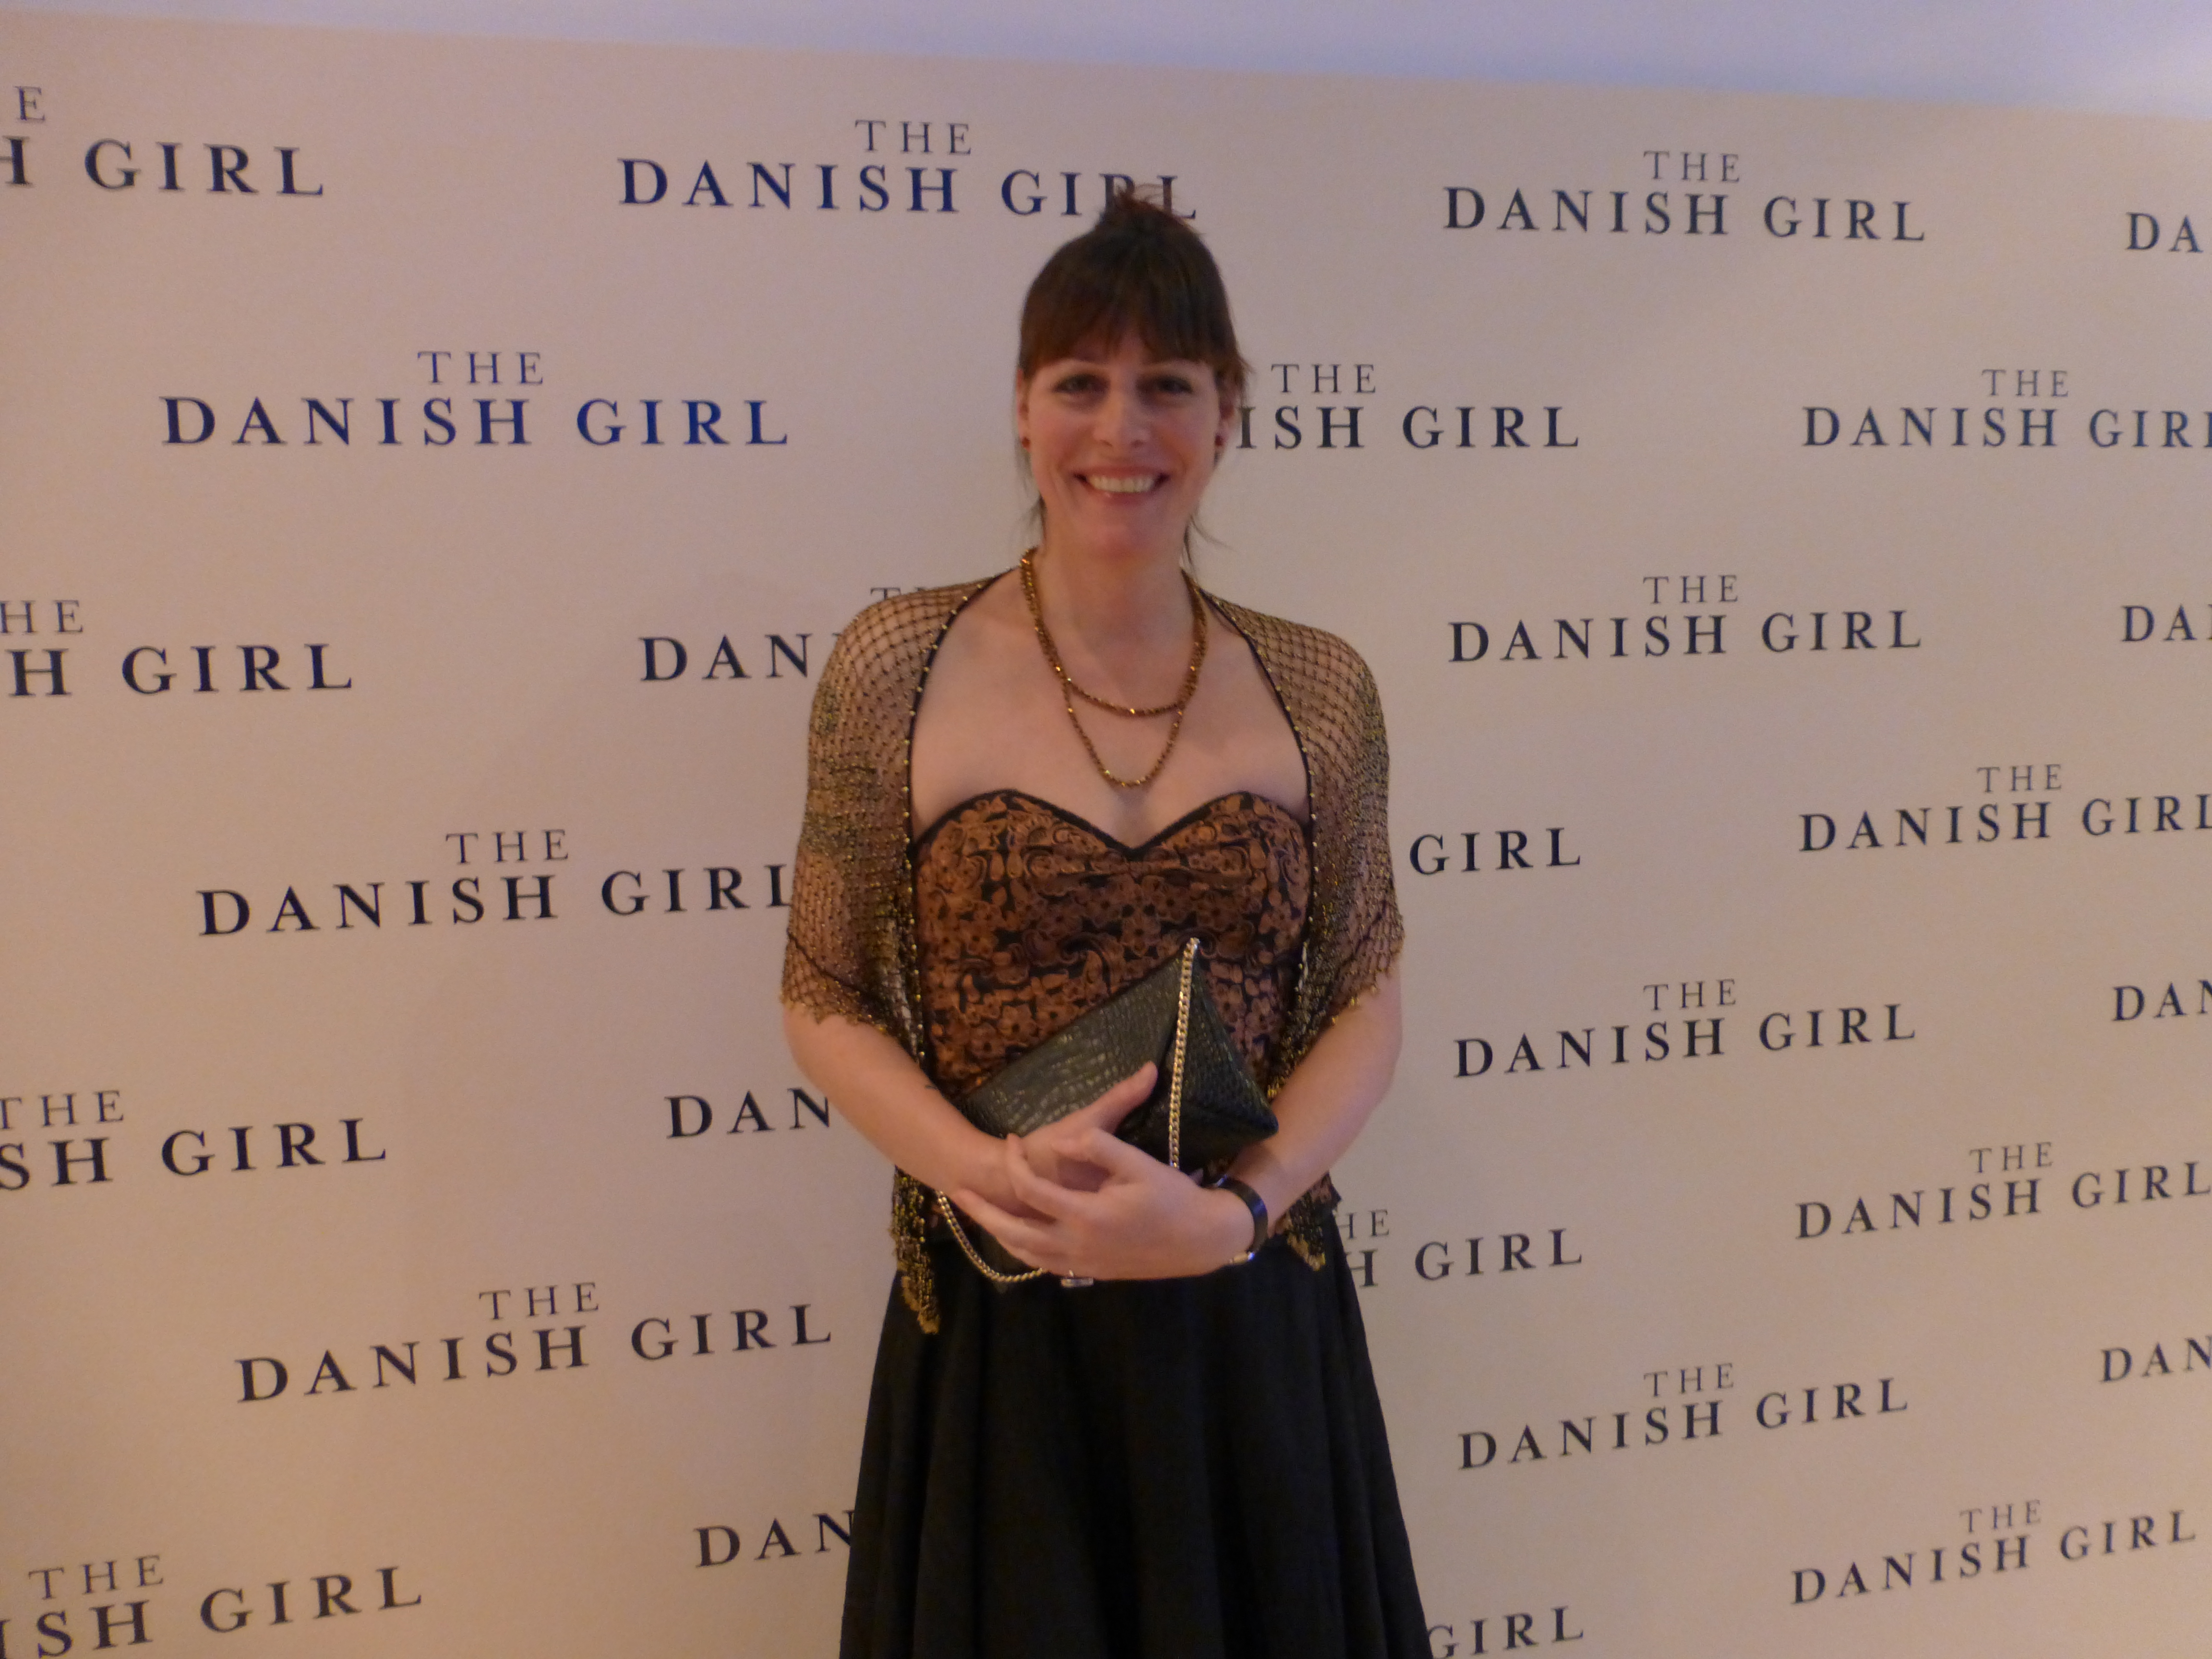 Attending the UK premiere of THE DANISH GIRL, London, 08.12.15